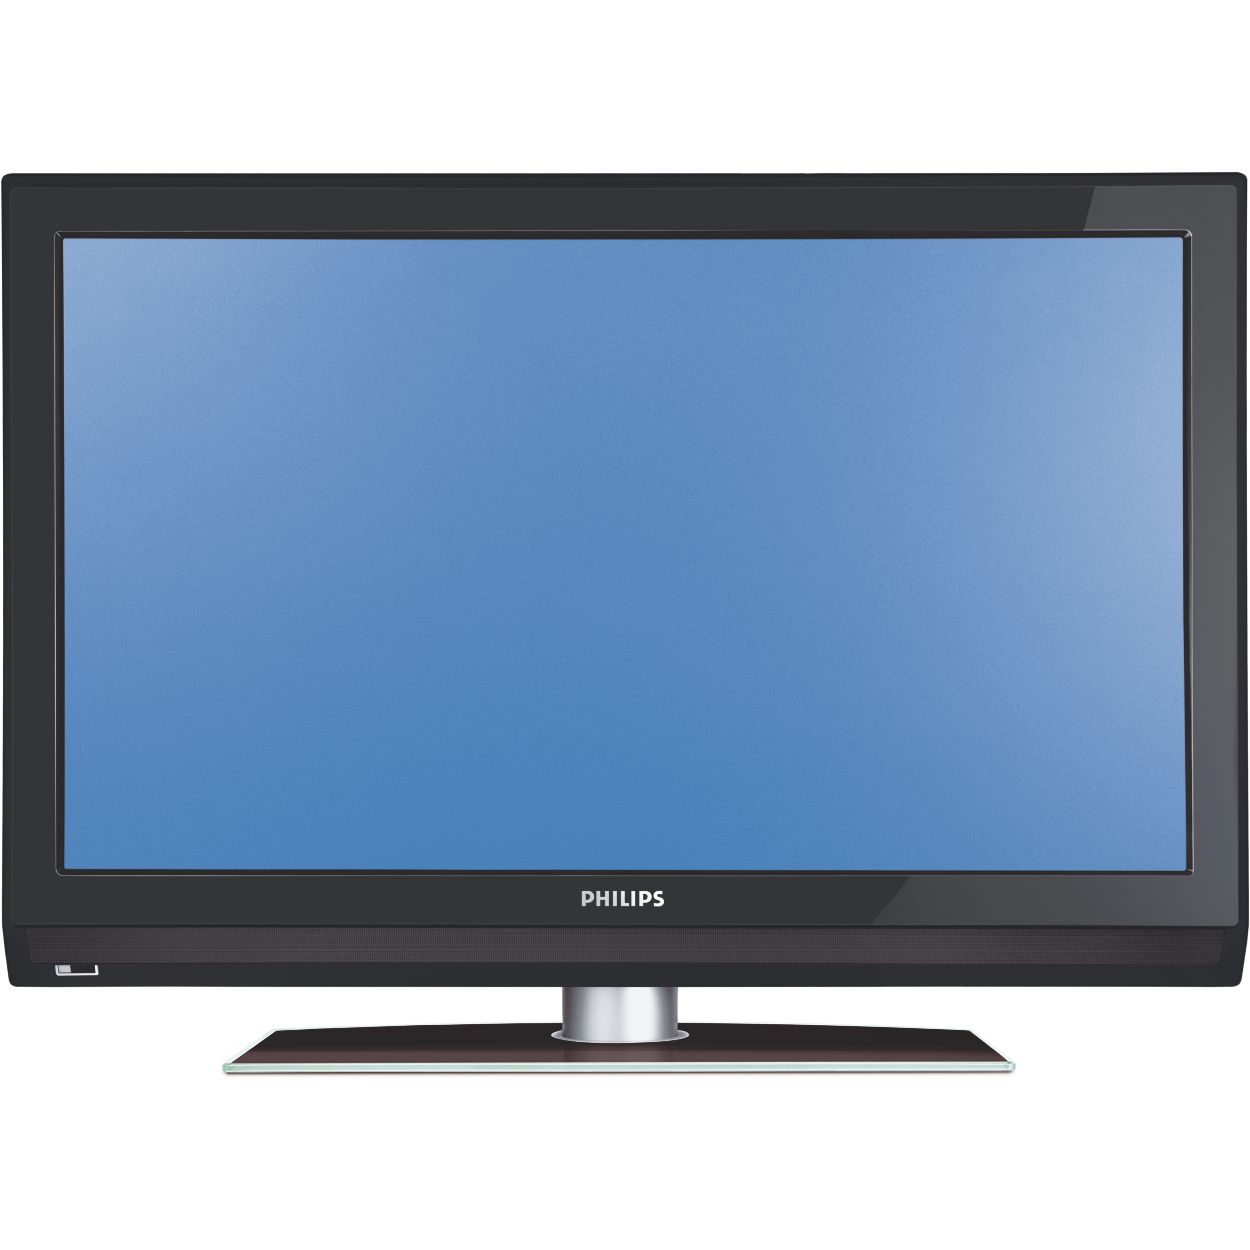 digital widescreen flat TV 42PFL5332D/37